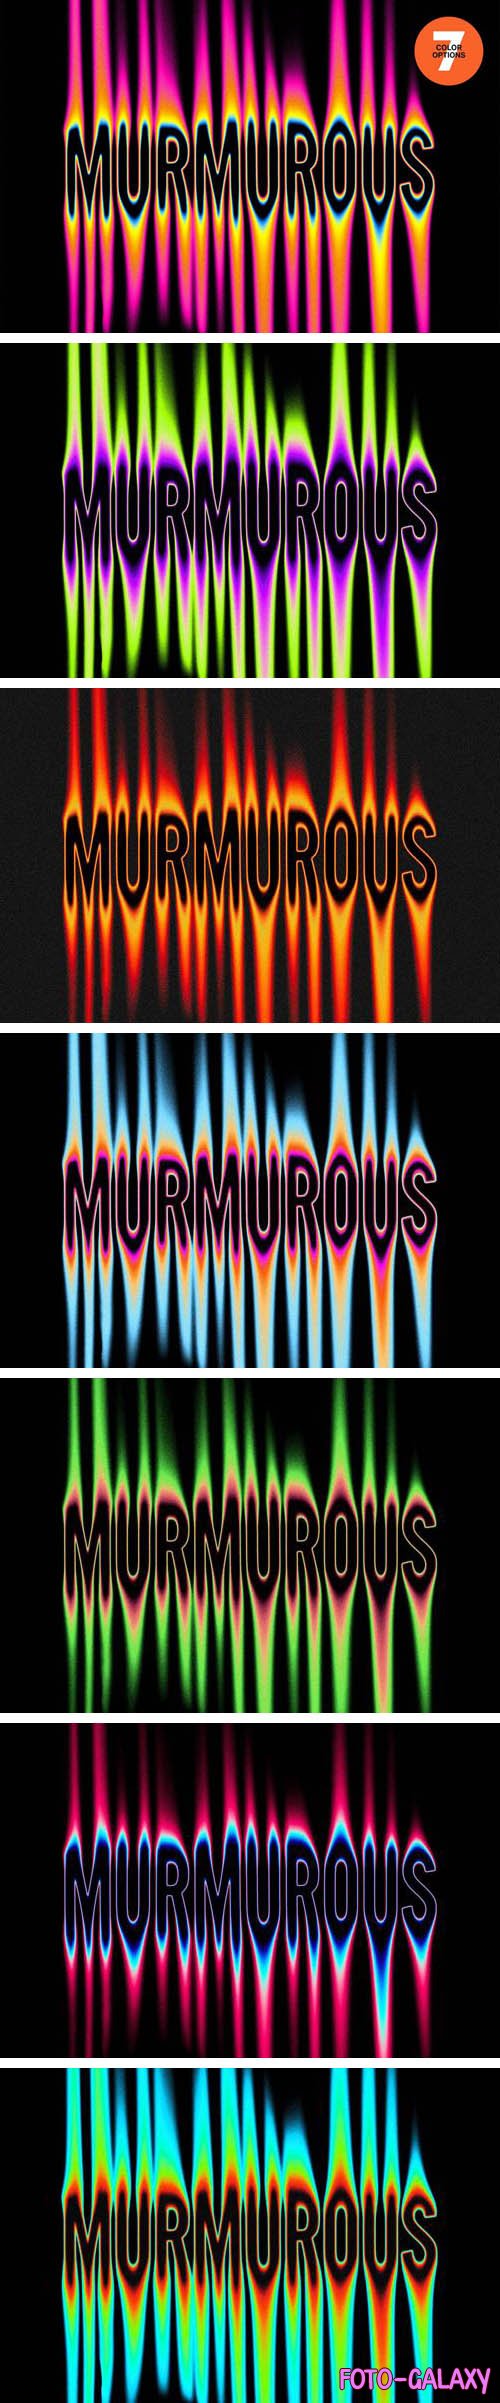 Murmurous - Acid Melting Text Effect for Photoshop